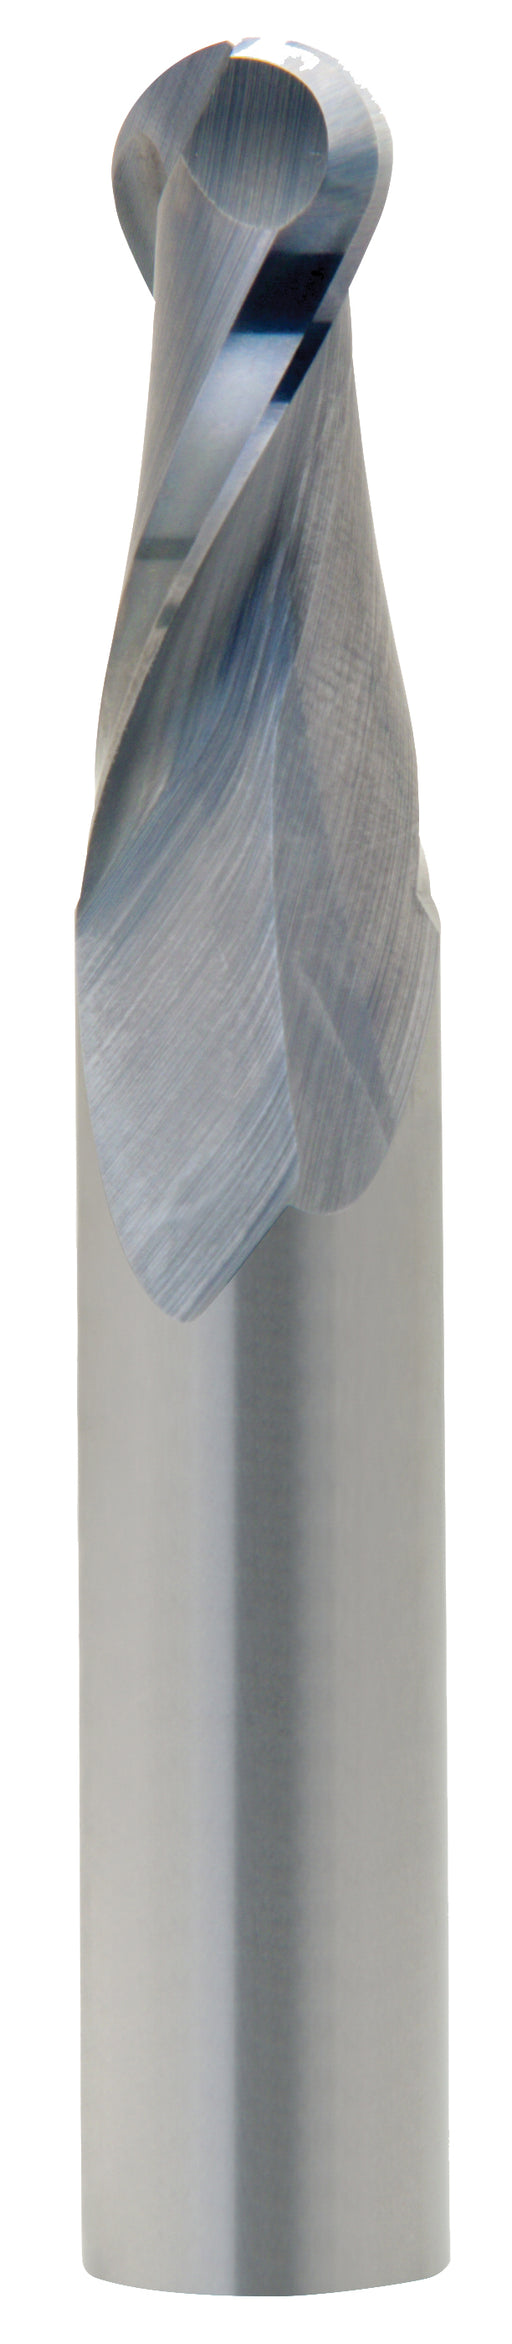 Solid Tungsten Spiral Upcut Ballnose Cutter - 2 Flute - Metric Range - tungstenandtool